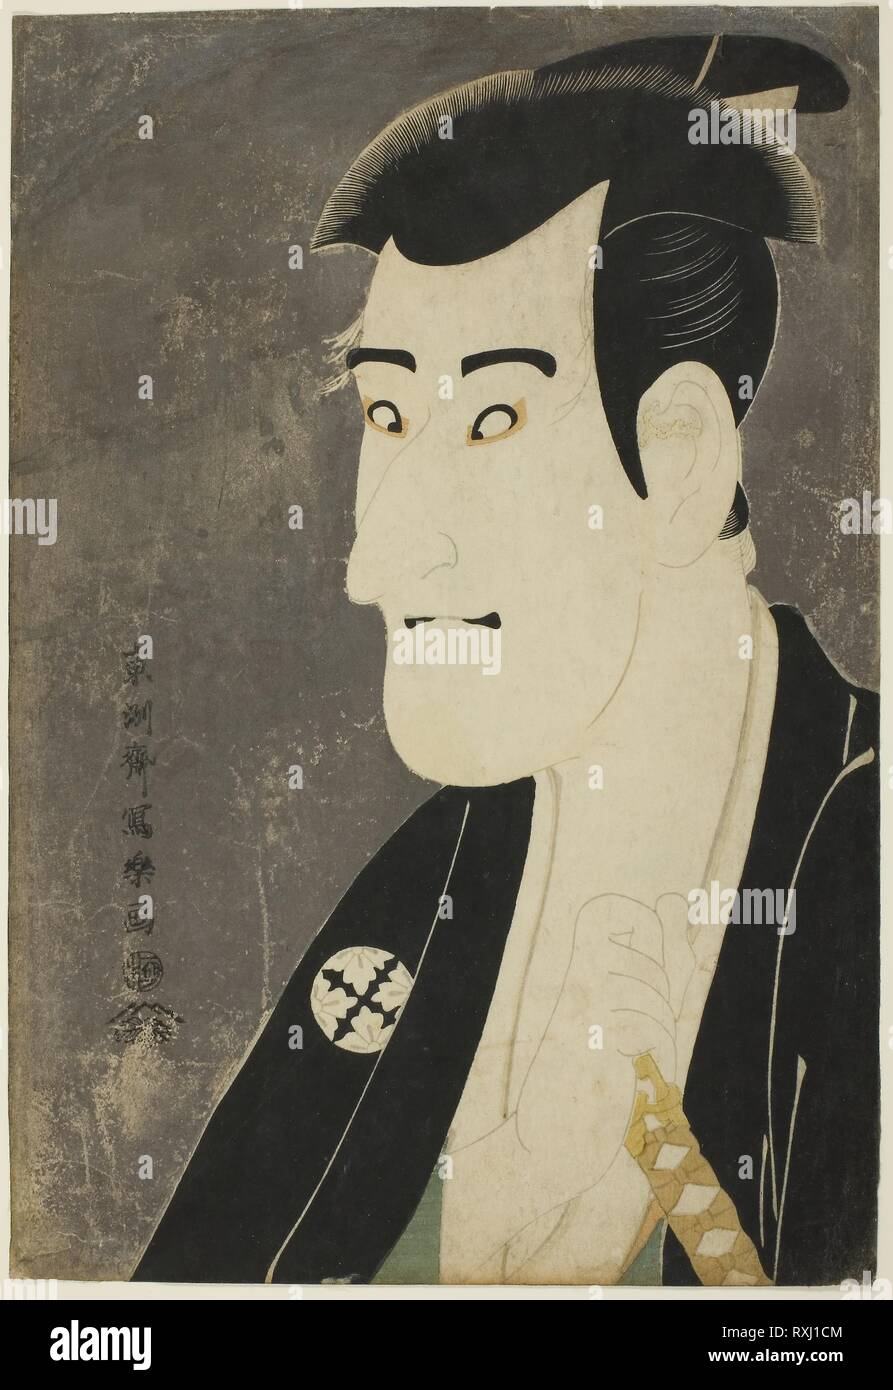 Japanese Art Fine Art Print Ichikawa Sadanji as Fusakichi Samurai Drama